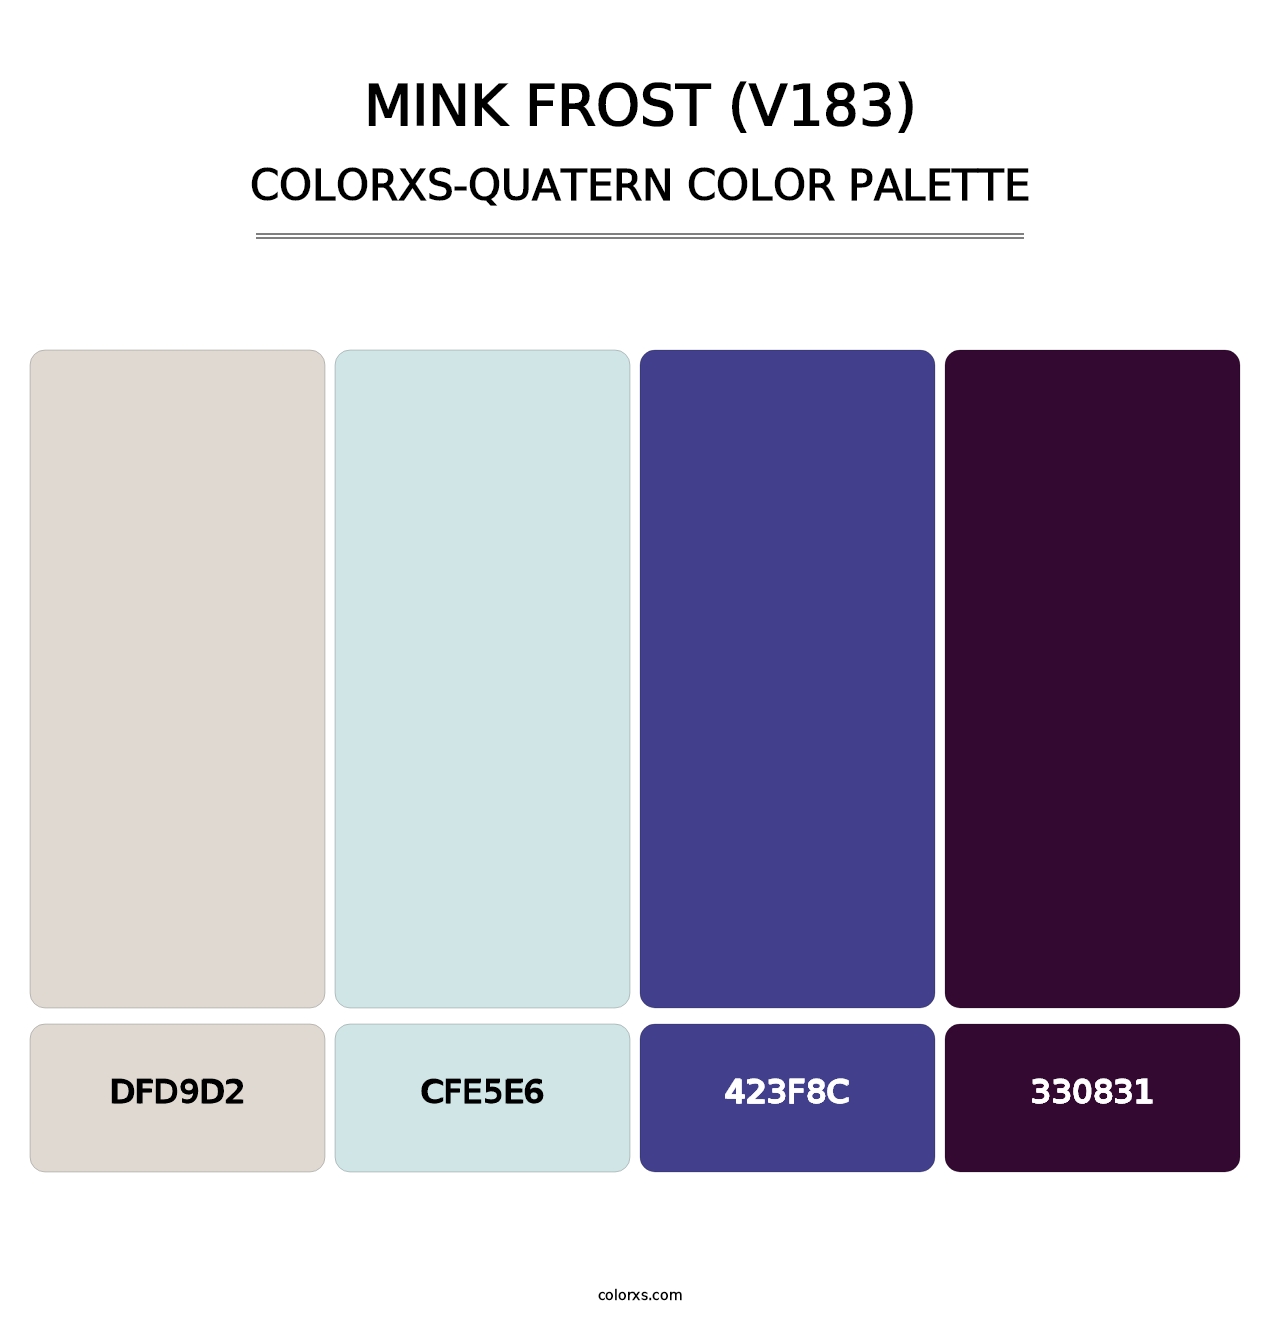 Mink Frost (V183) - Colorxs Quatern Palette